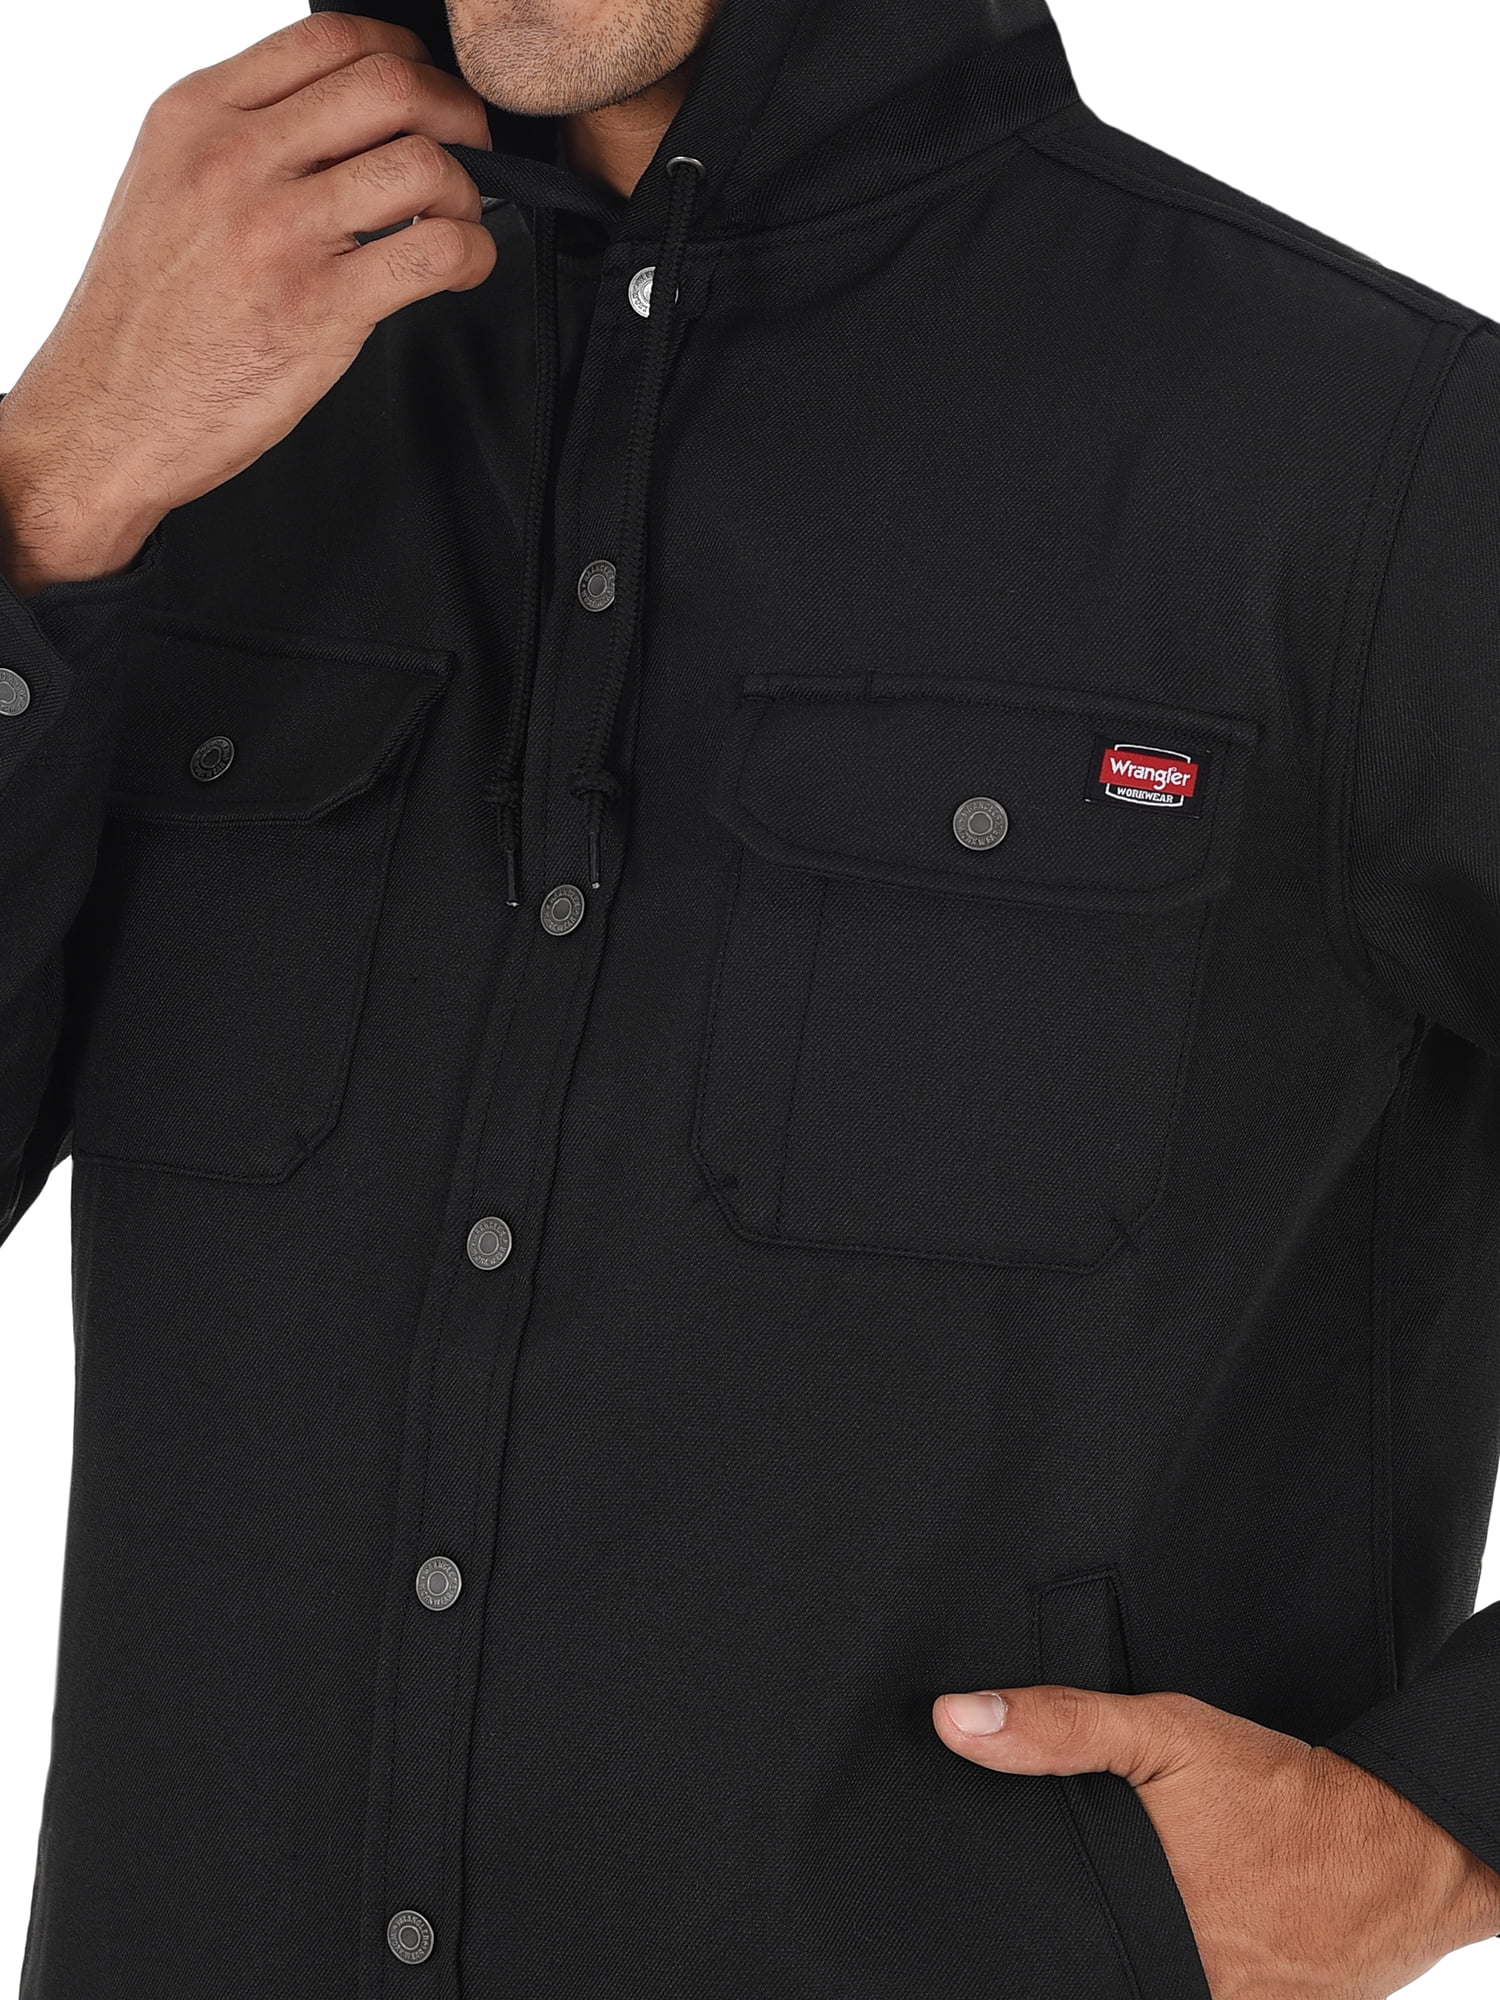 Wrangler Men's Essential Shirt Jacket with Polar Fleece Lining and Hood -  